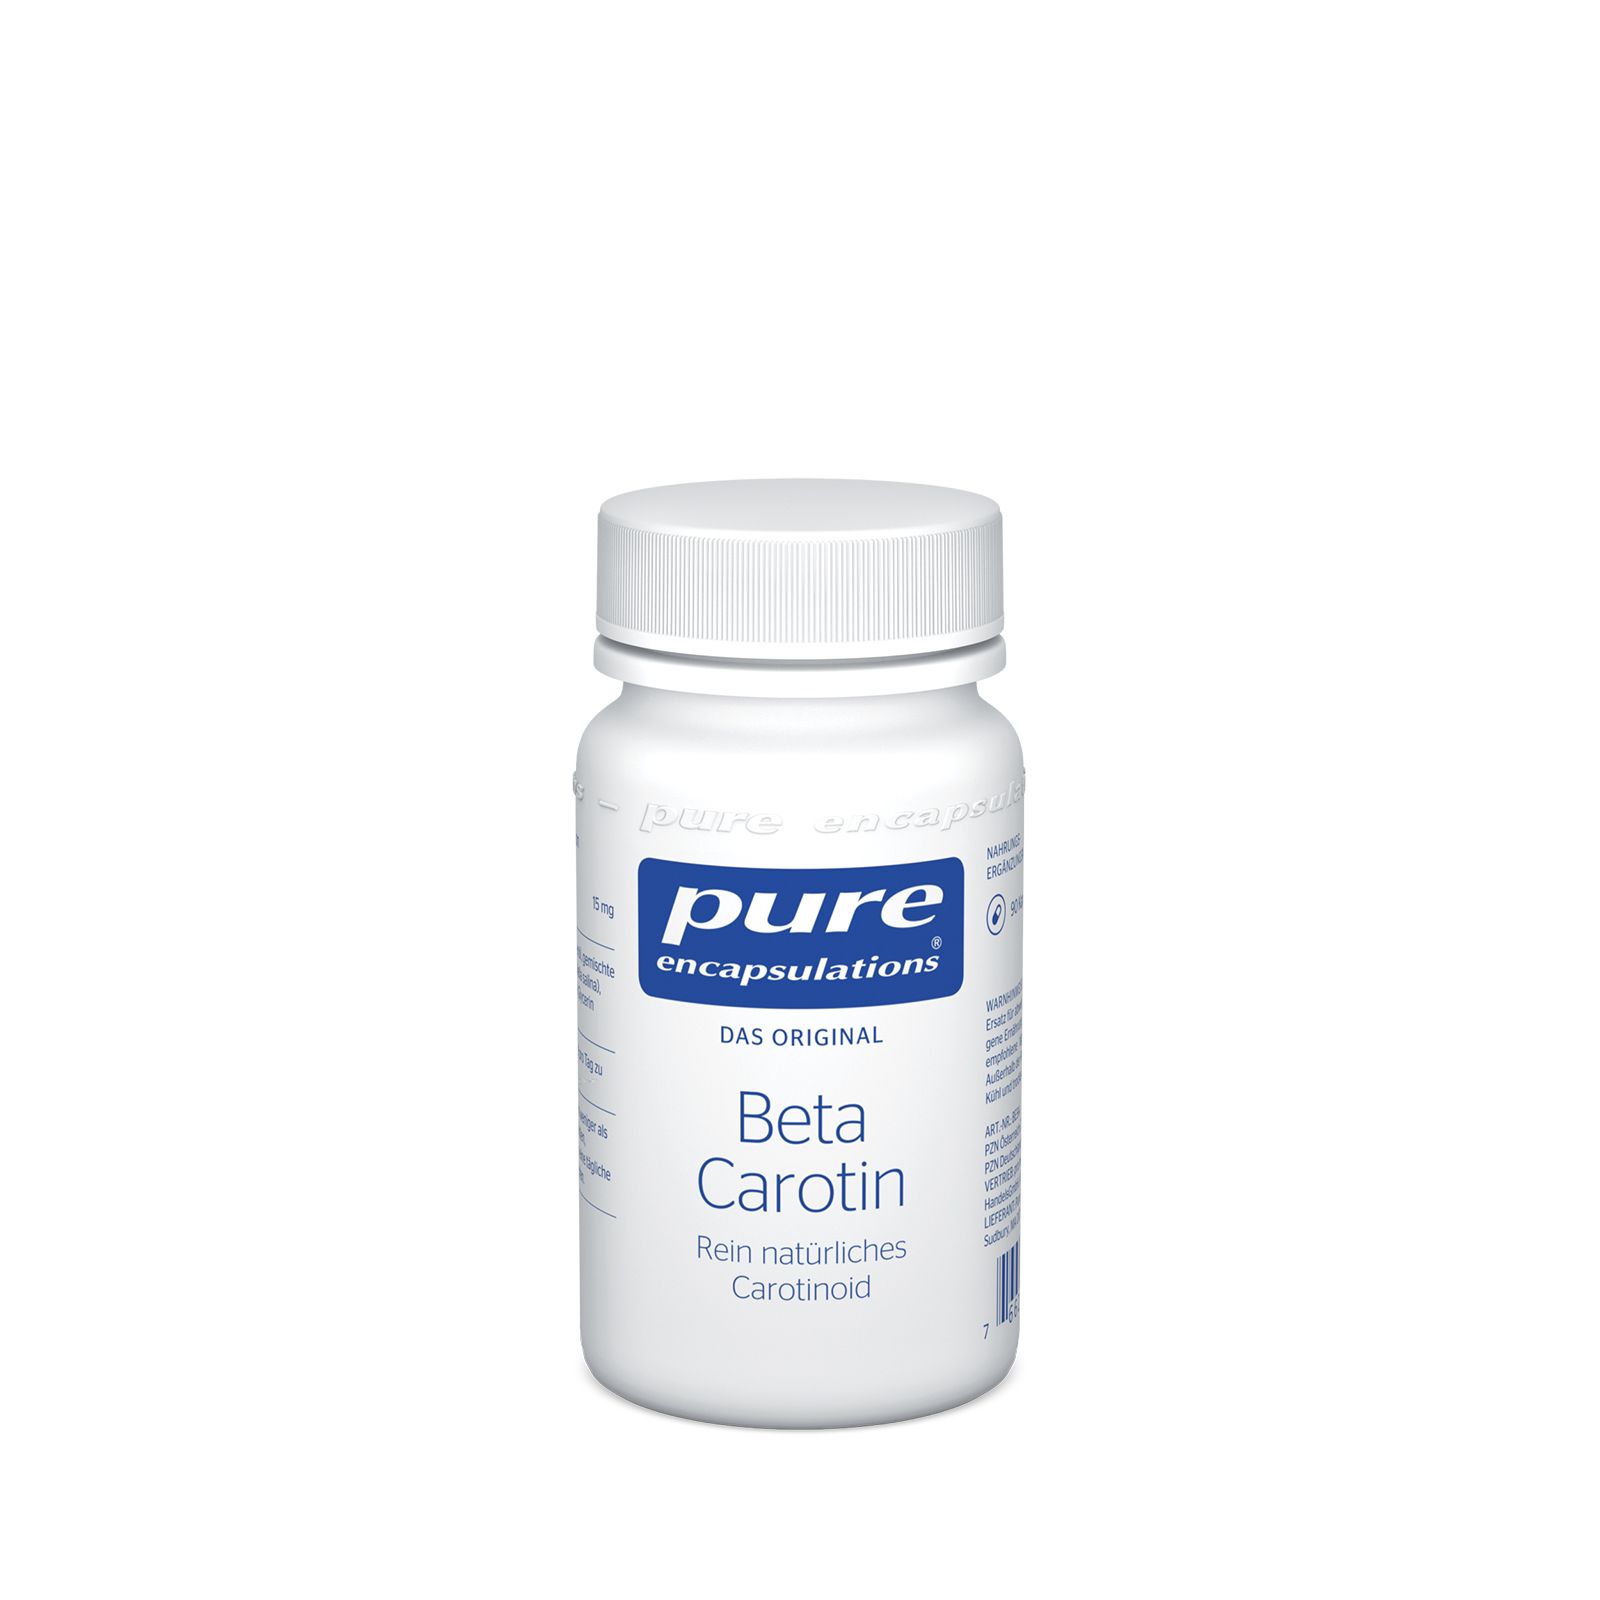 Pure encapsulations® Beta Carotin